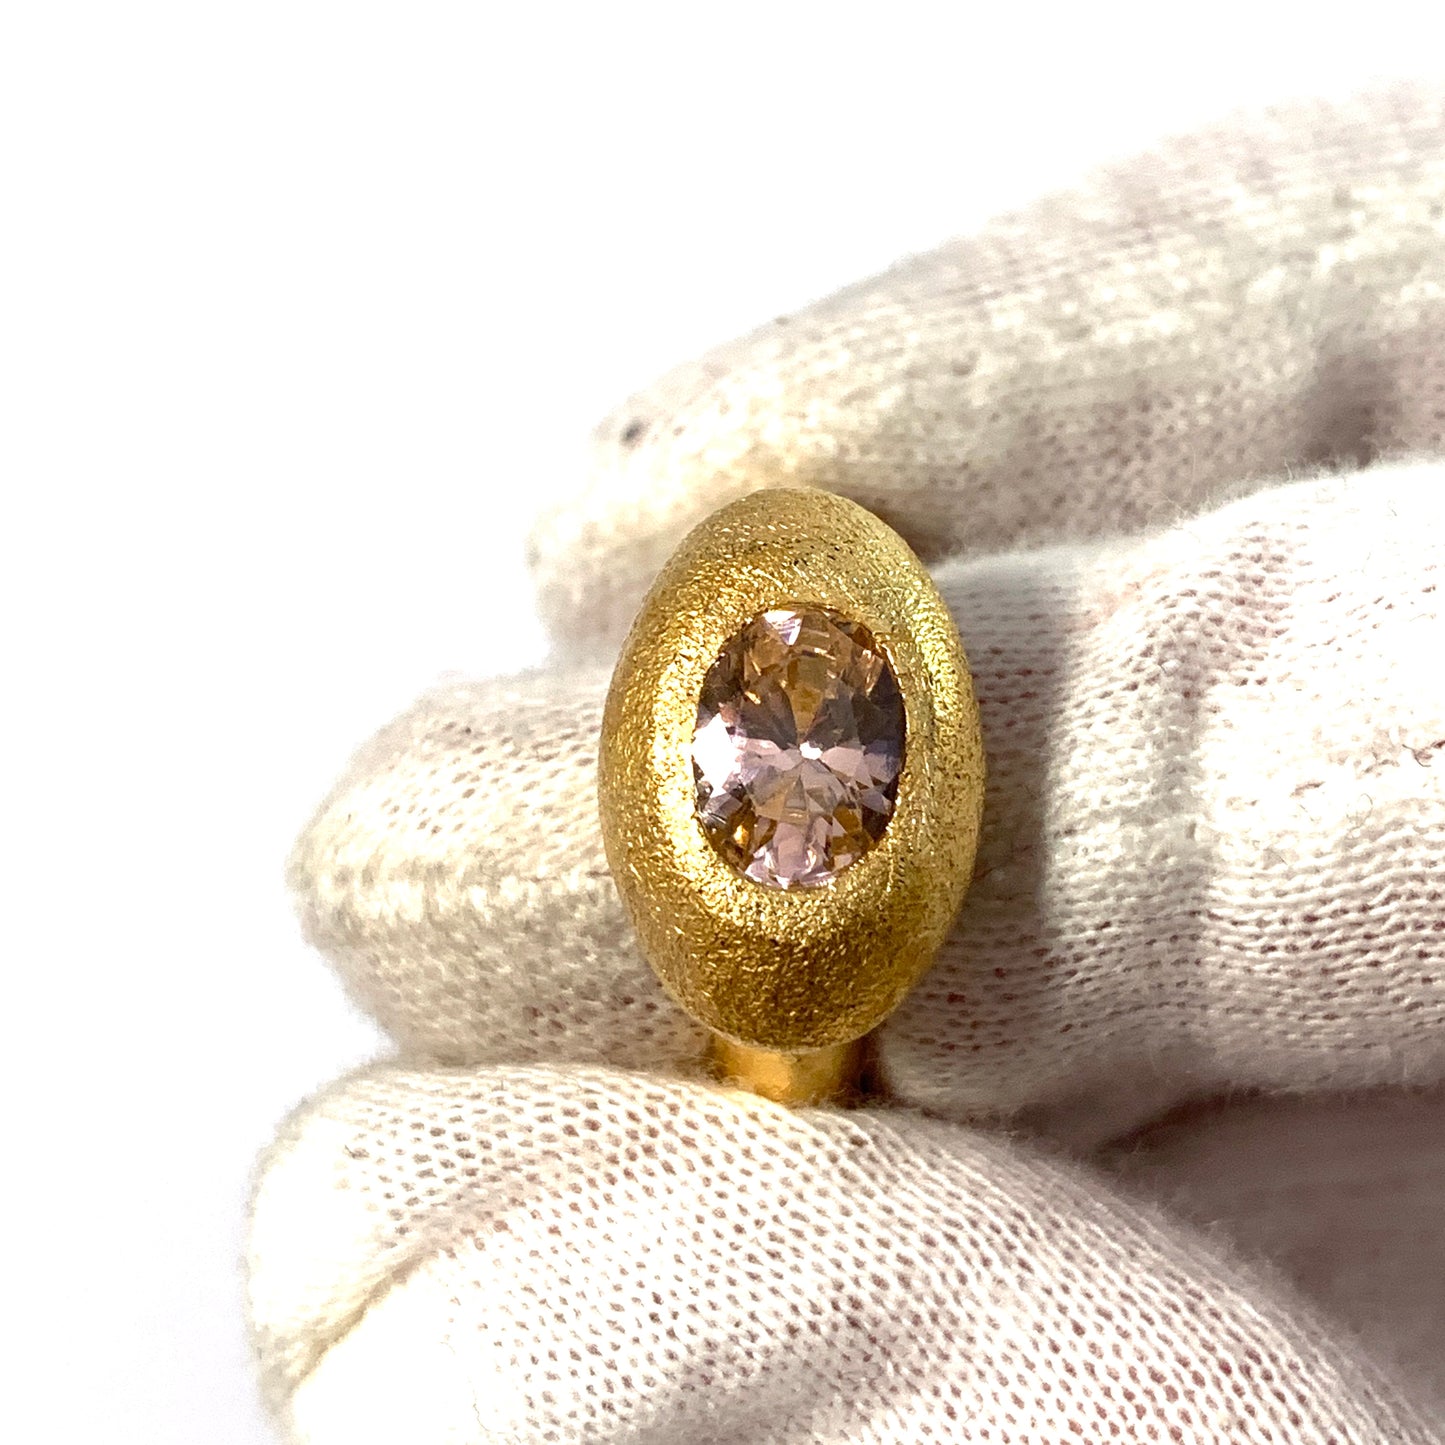 Paola Ferro, Milano, Italy. Vintage 18k Gold Pink Tourmaline Ring.